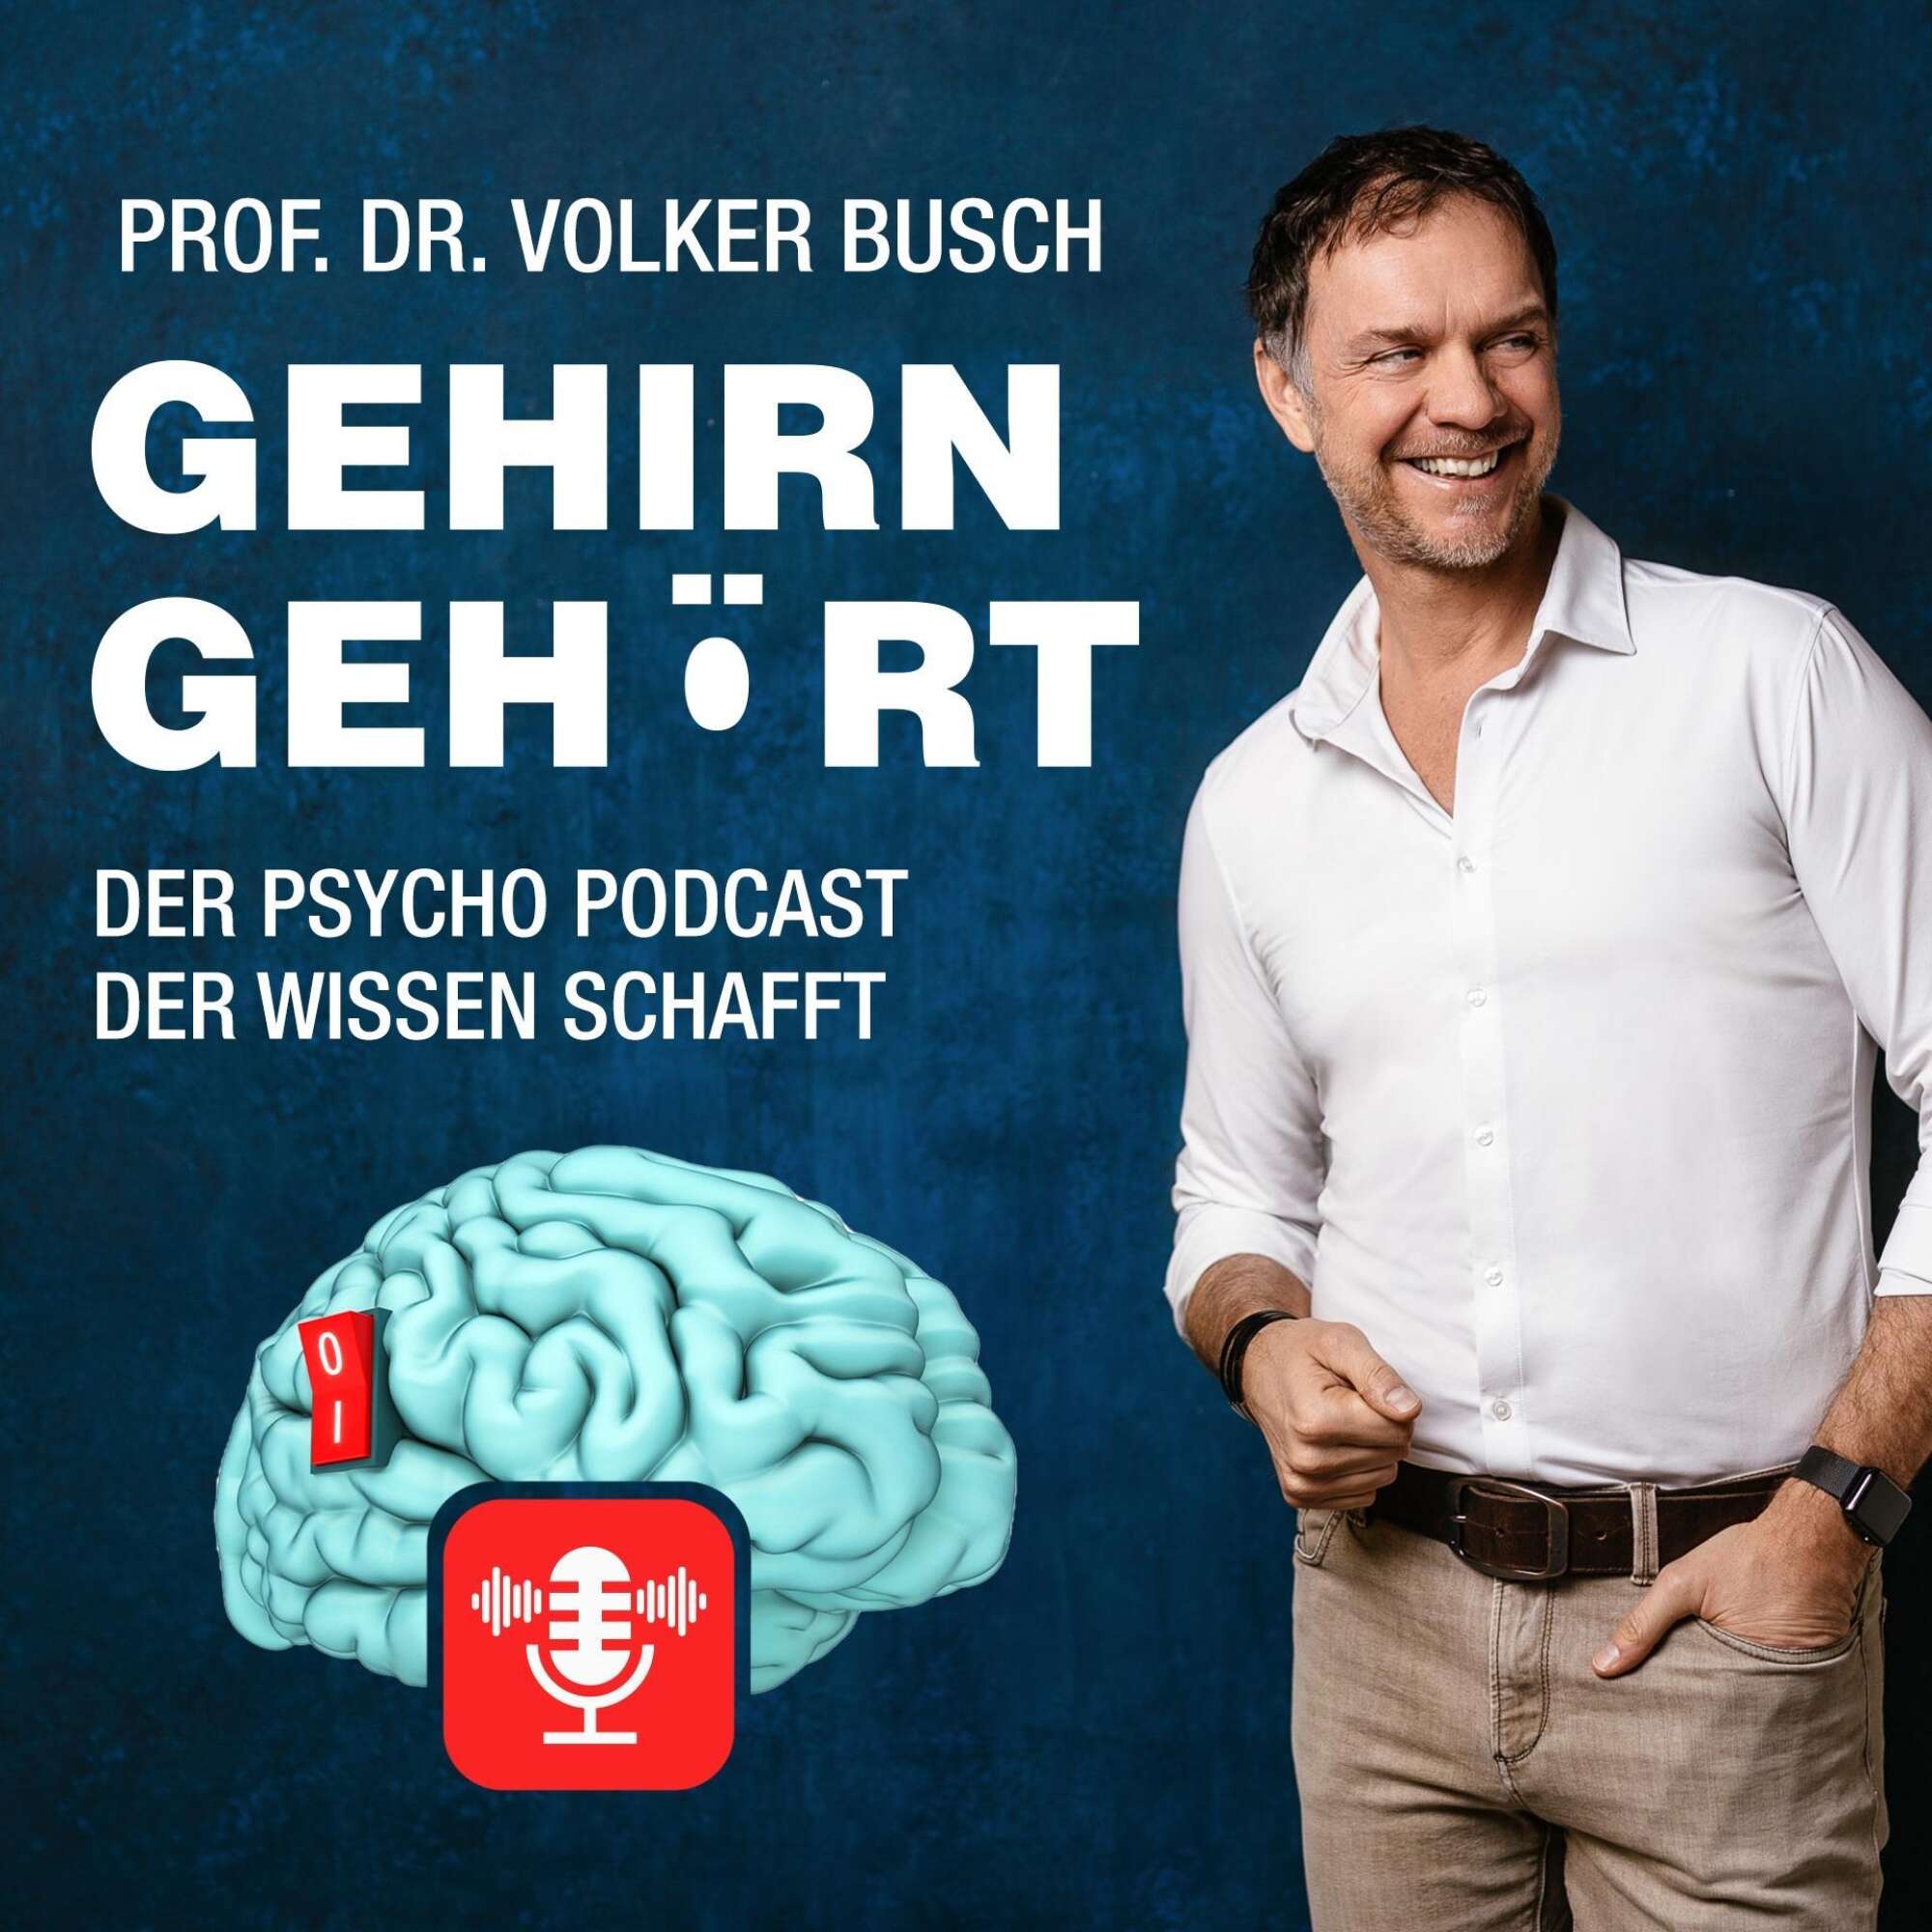 Podcast-Cover "Gehirn gehört"